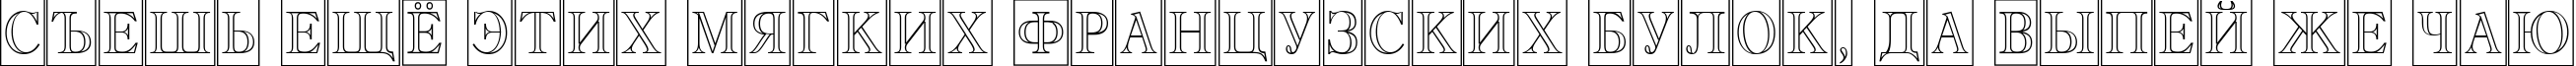 Пример написания шрифтом a_AntiqueTitulTrCmOtl текста на русском